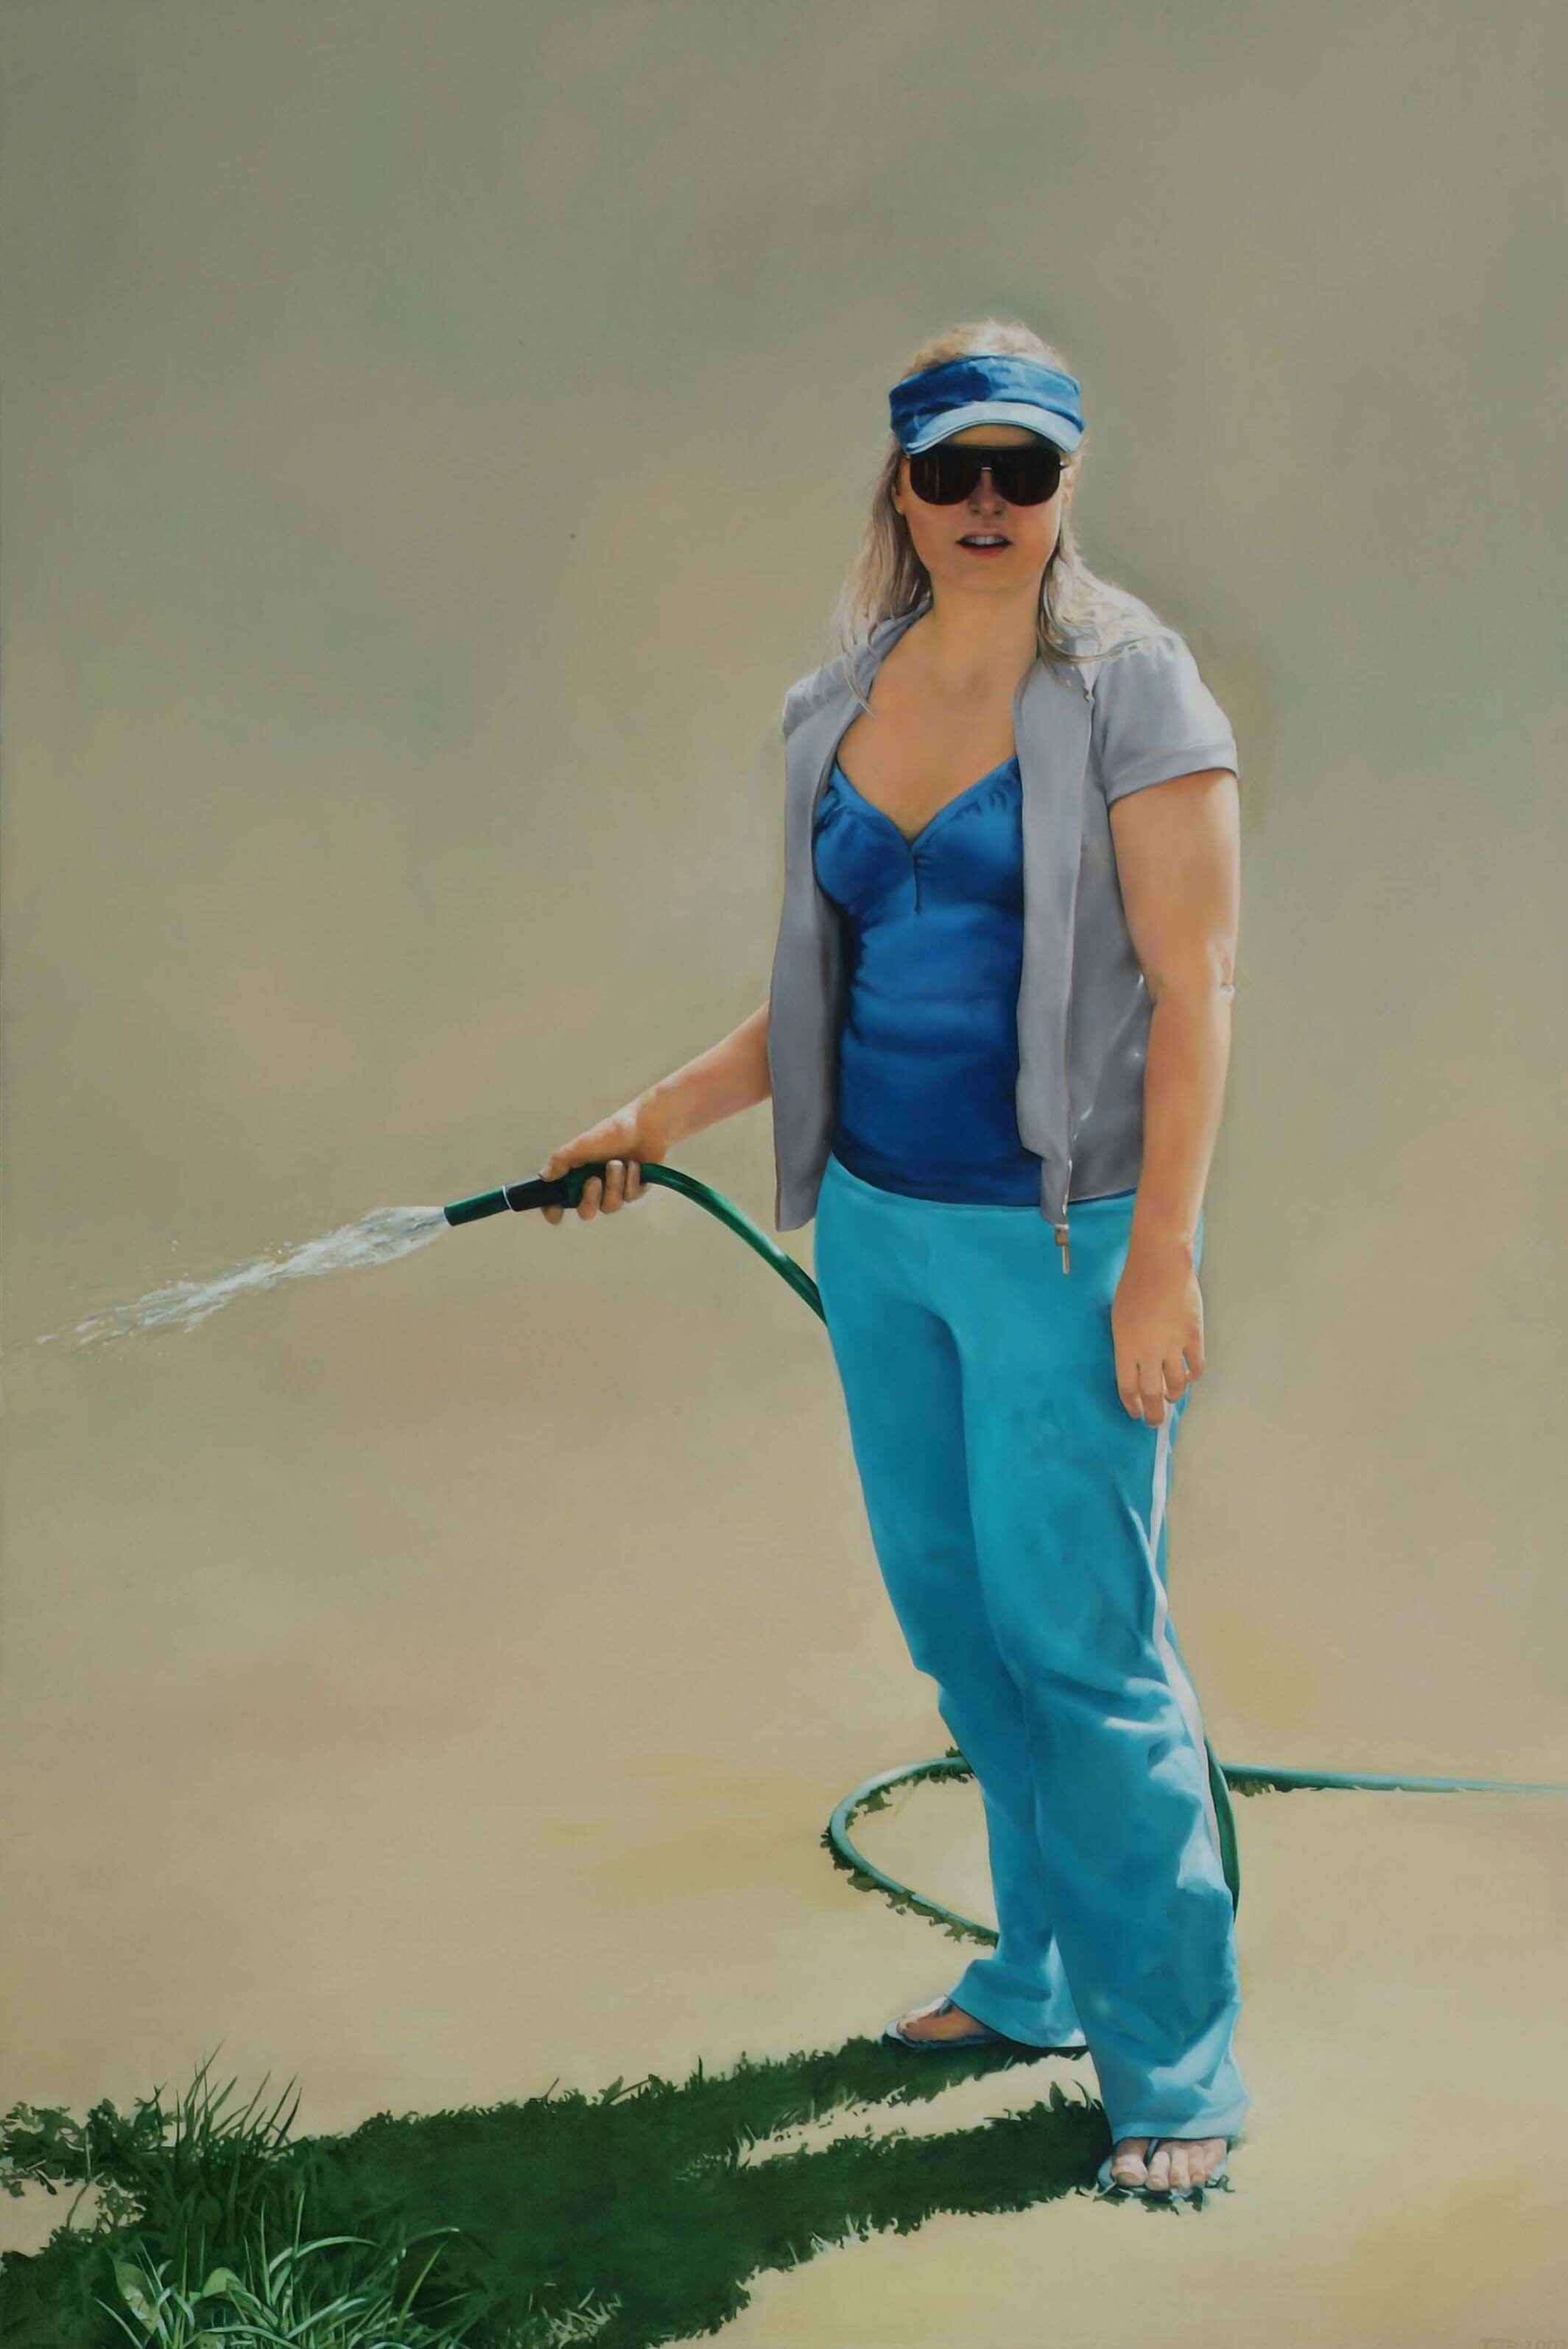  Irene Ferguson, The Blue Girl , 2007,  Oil on canvas, New Zealand Portrait Gallery Collection  